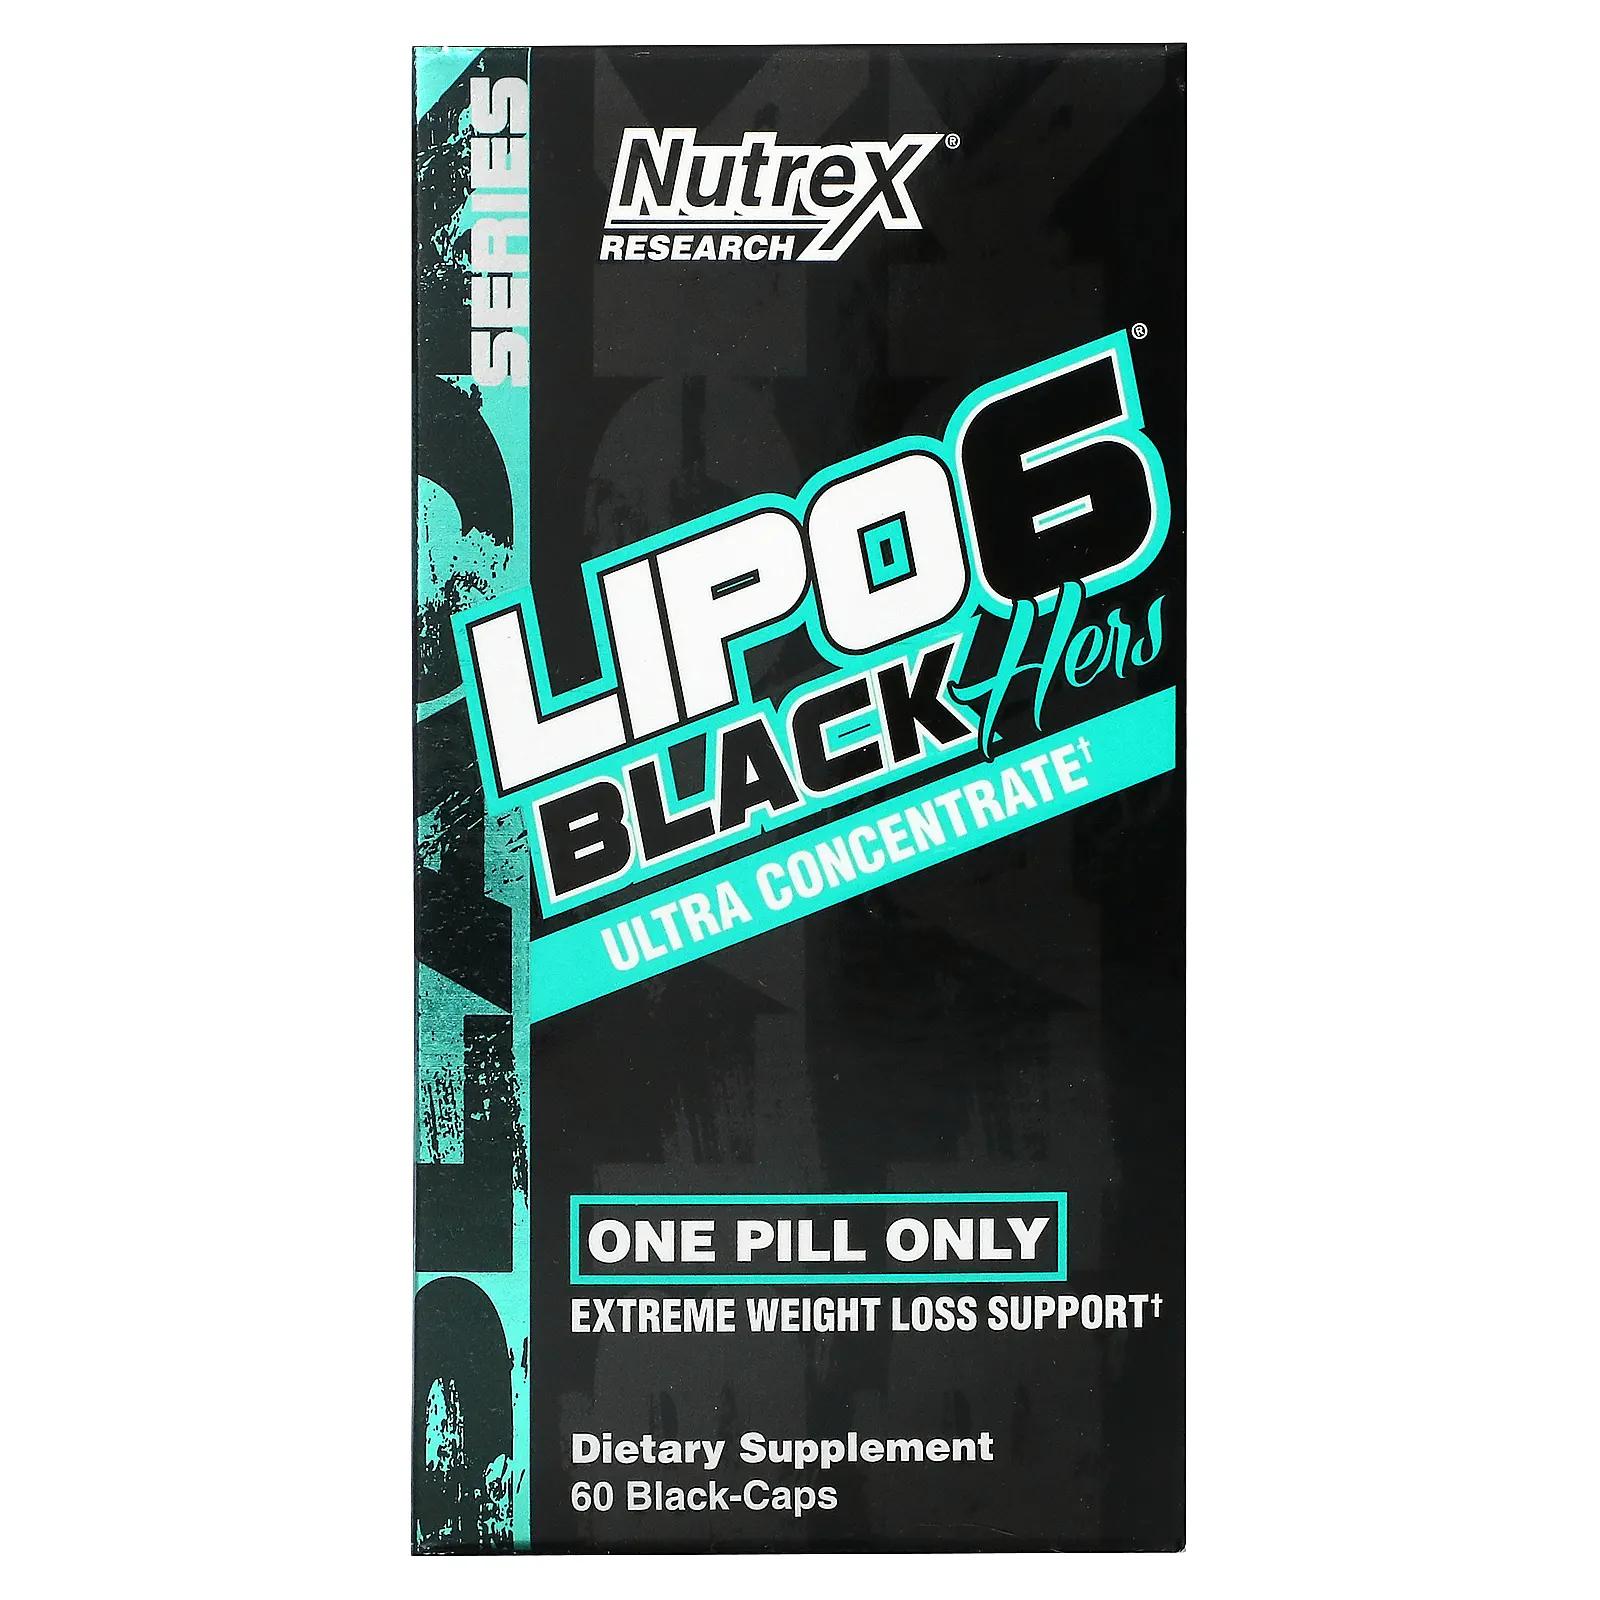 Nutrex Research Lipo-6 Black Hers ультраконцентрированный 60 черных капсул nutrex research lipo 6 black ультраконцентрат 60 капсул